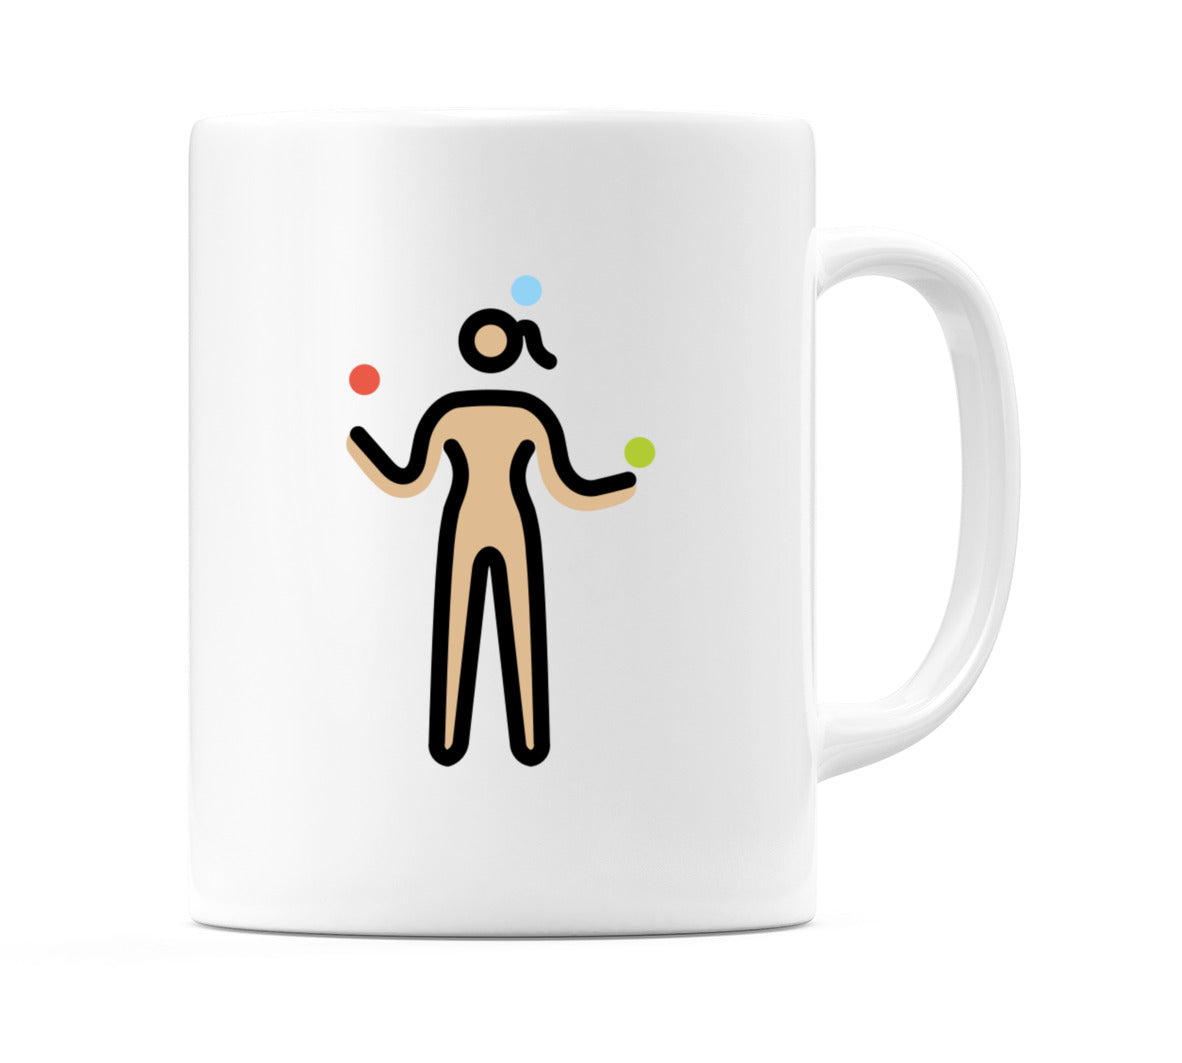 Female Juggling: Medium-Light Skin Tone Emoji Mug